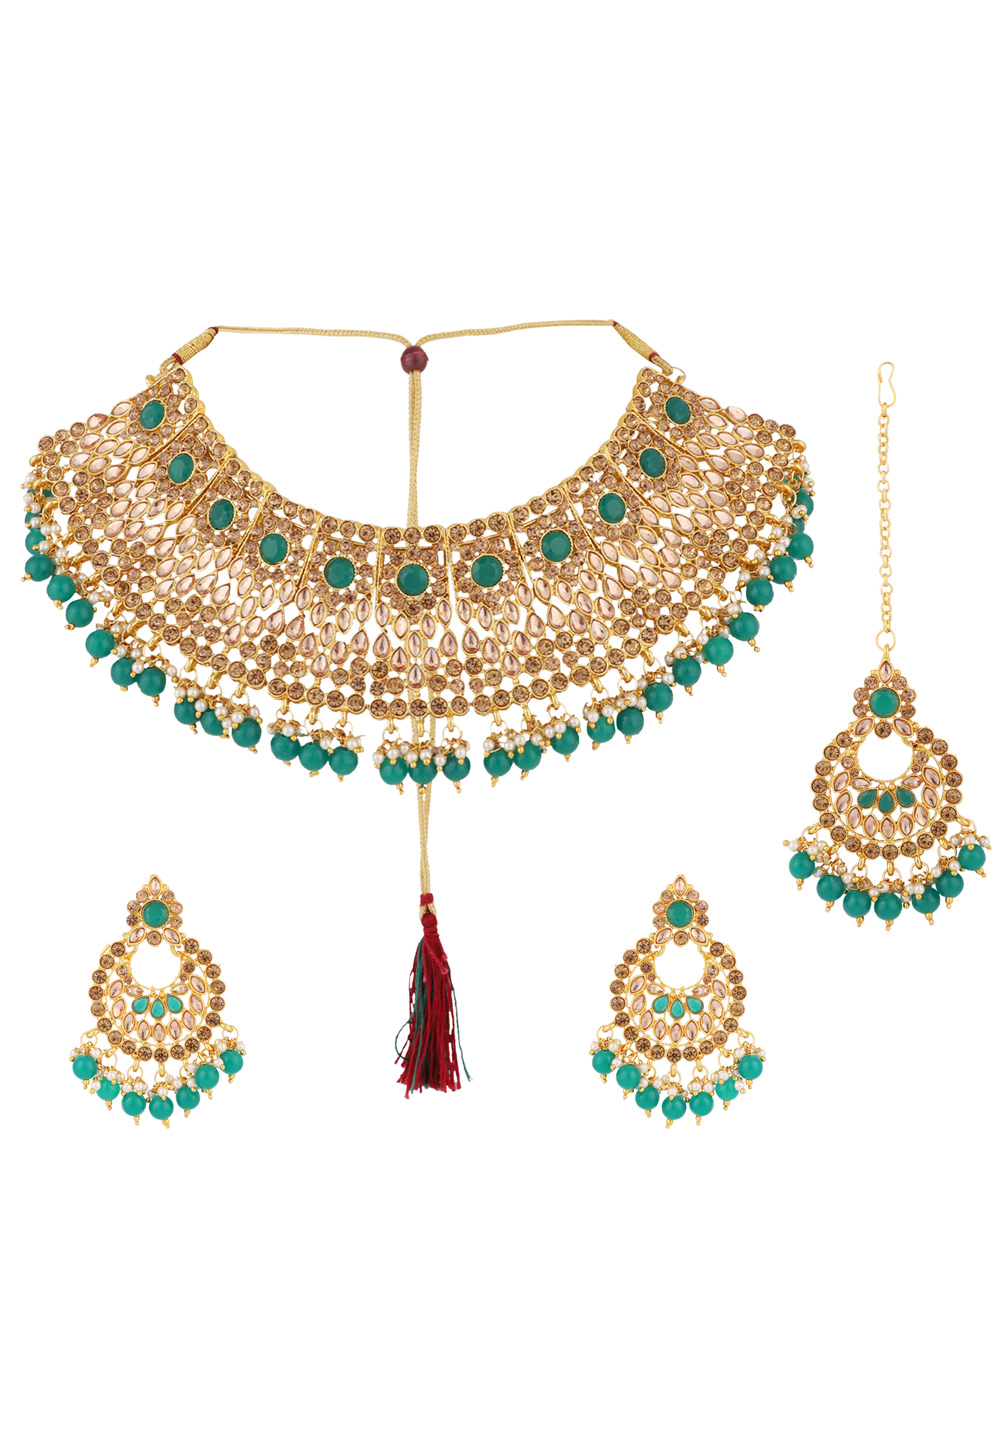 Indian Traditional Light Green Meena Jhumki Jhumka Earrings   FashionCrabcom